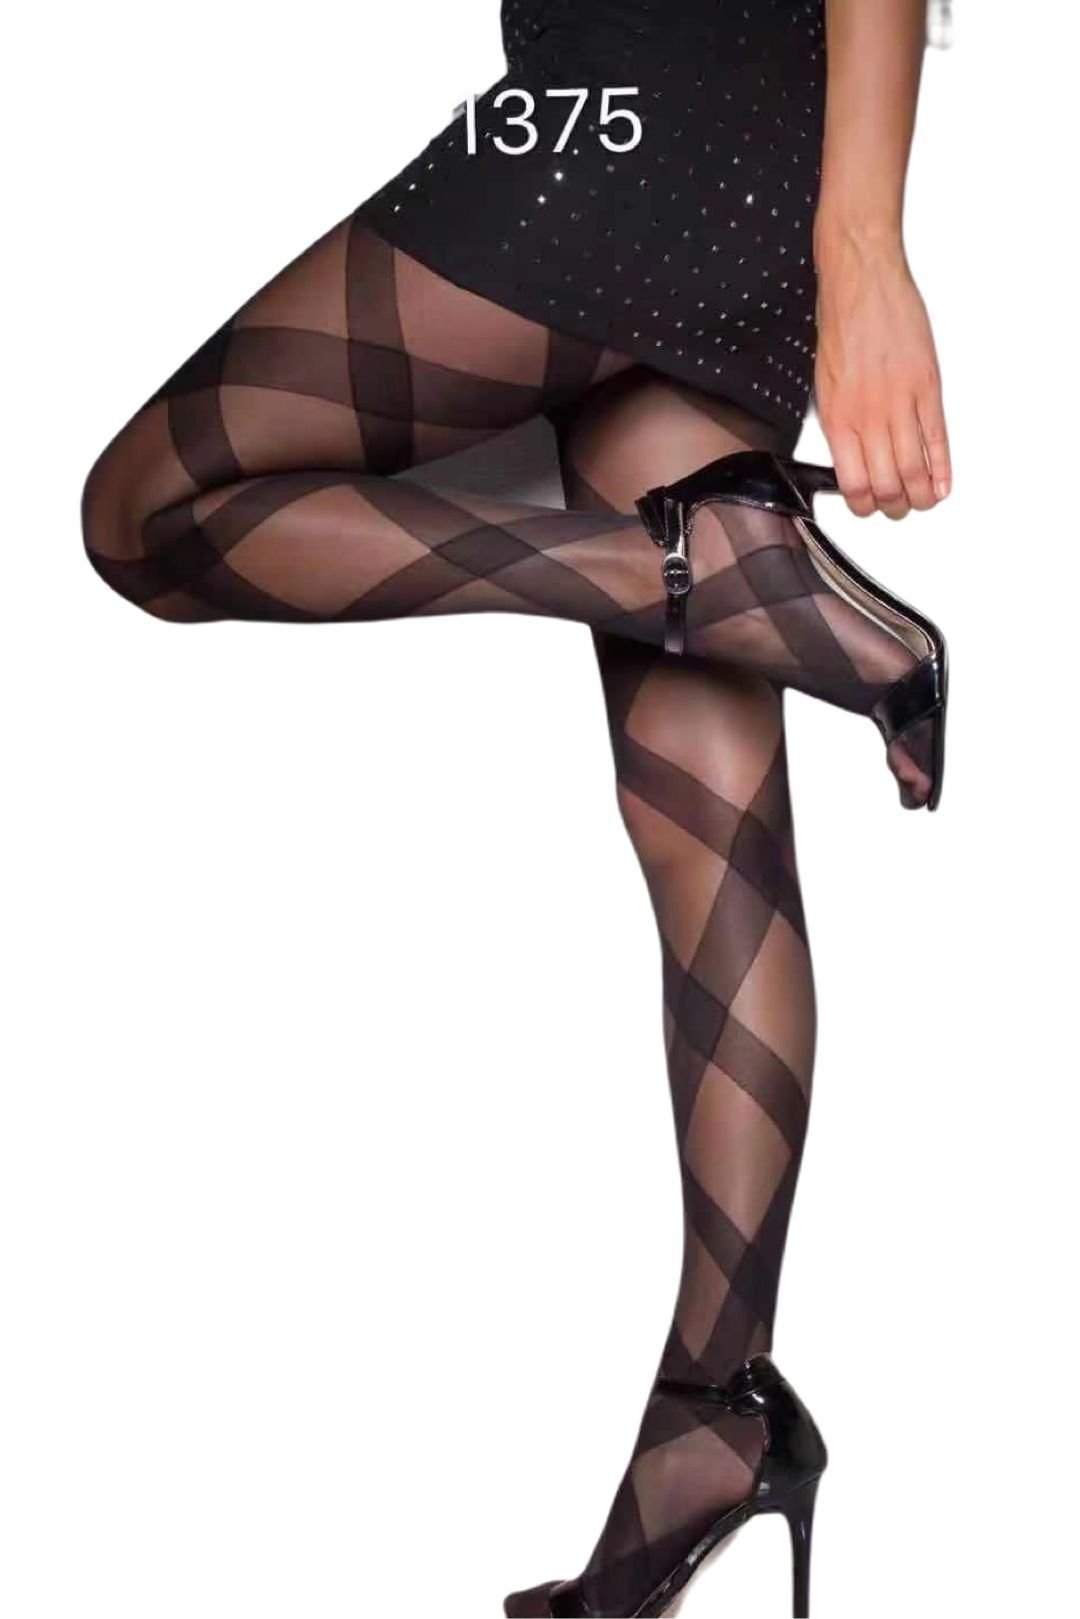 cofi1453 Feinstrumpfhose Damen Strumpfhose mit Muster Nero Frauen Hose Socken schwarz